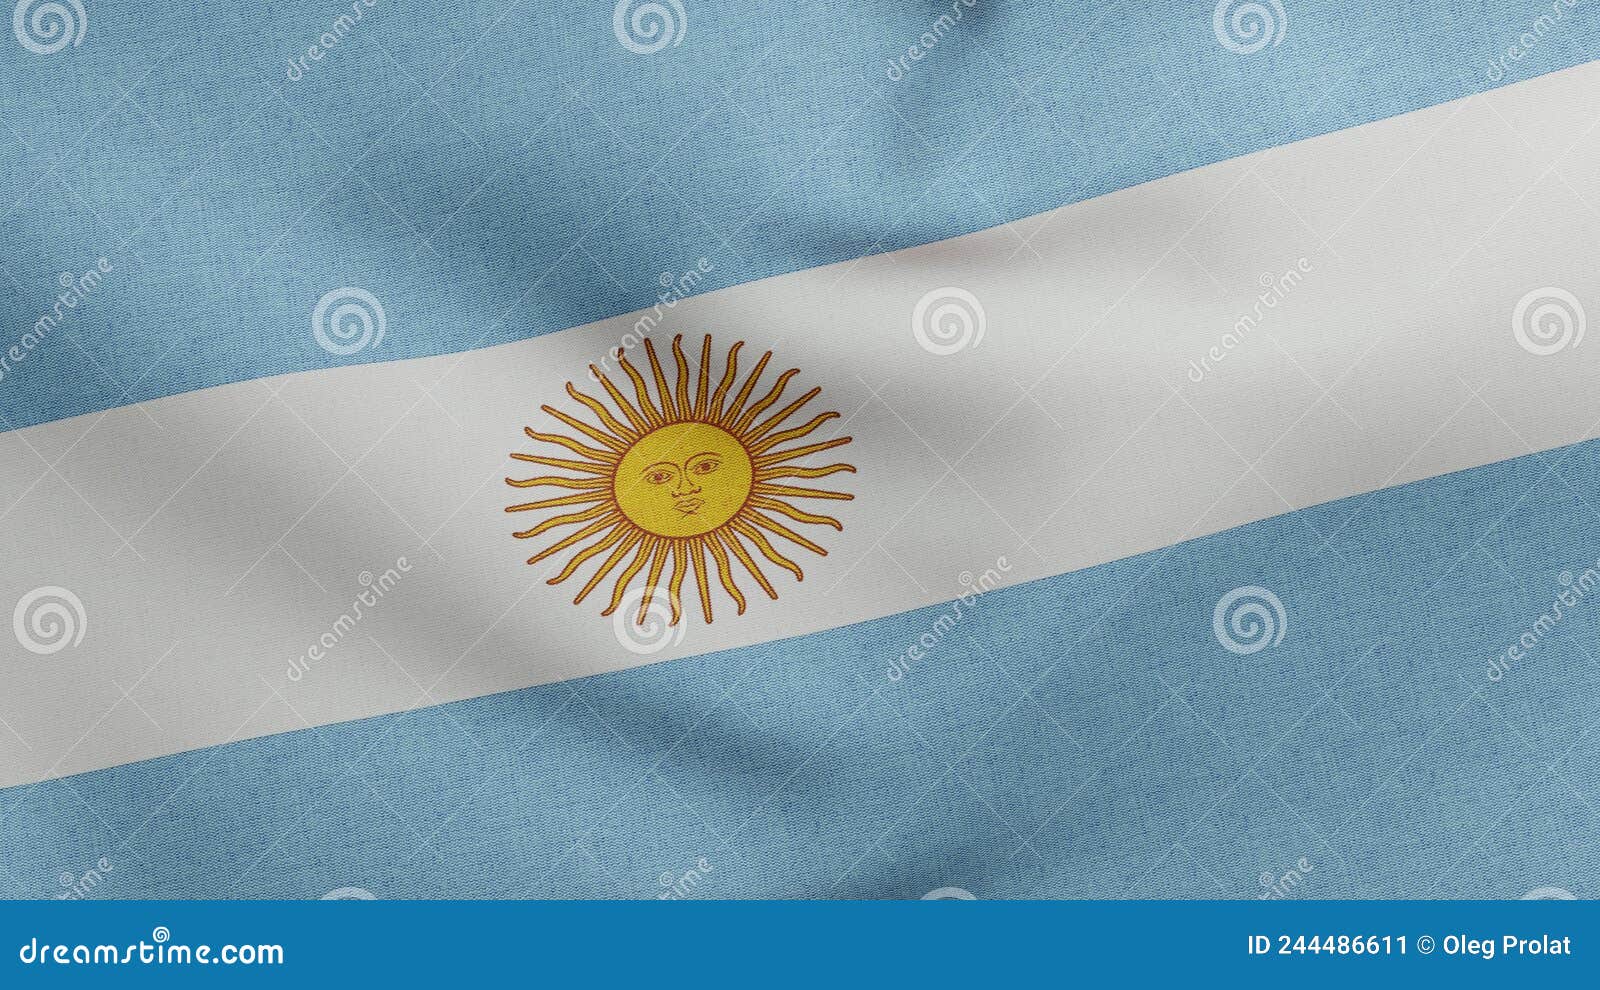 national flag of argentina waving 3d render, republic argentine flag textile ed by manuel belgrano, argentinian